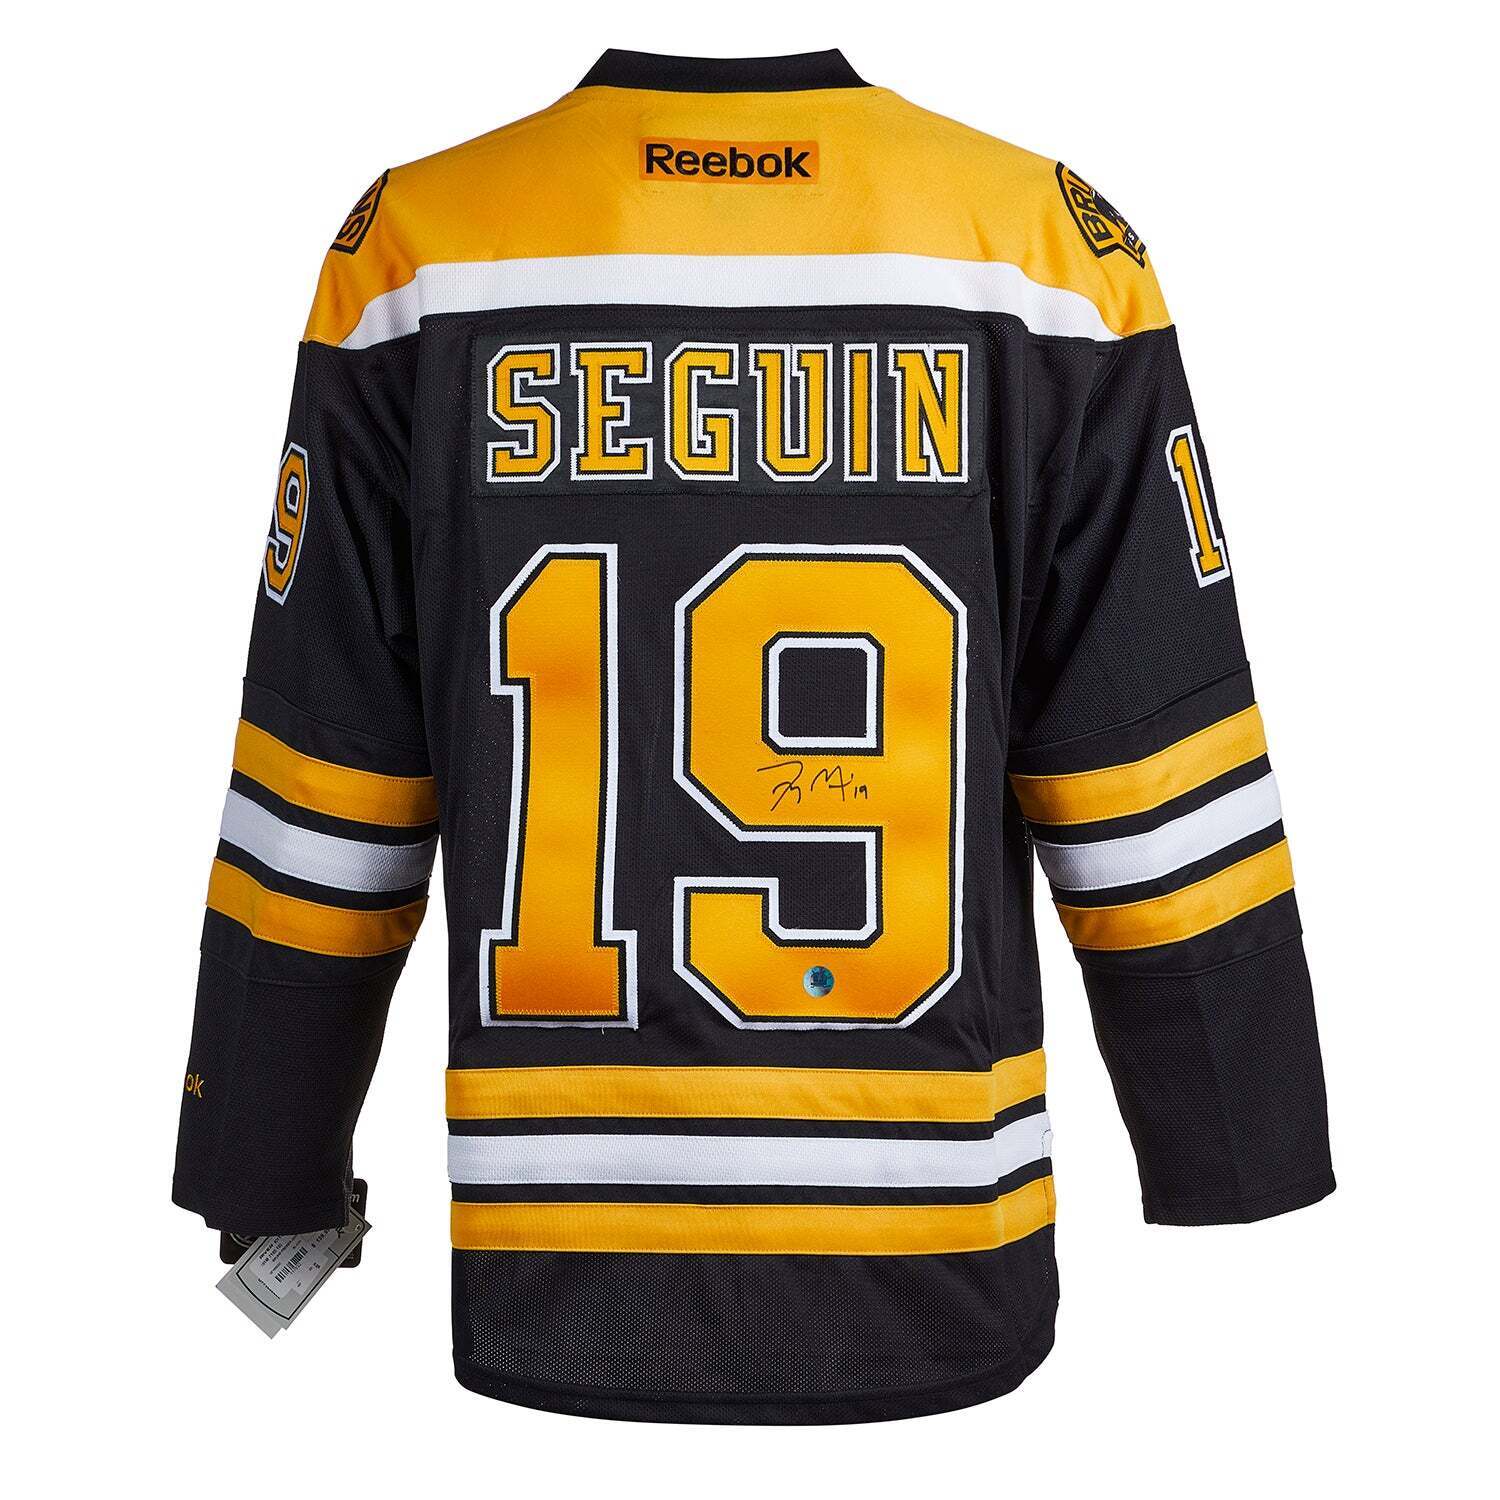 Tyler Seguin Boston Bruins Autographed Signed Rookie Reebok Jersey